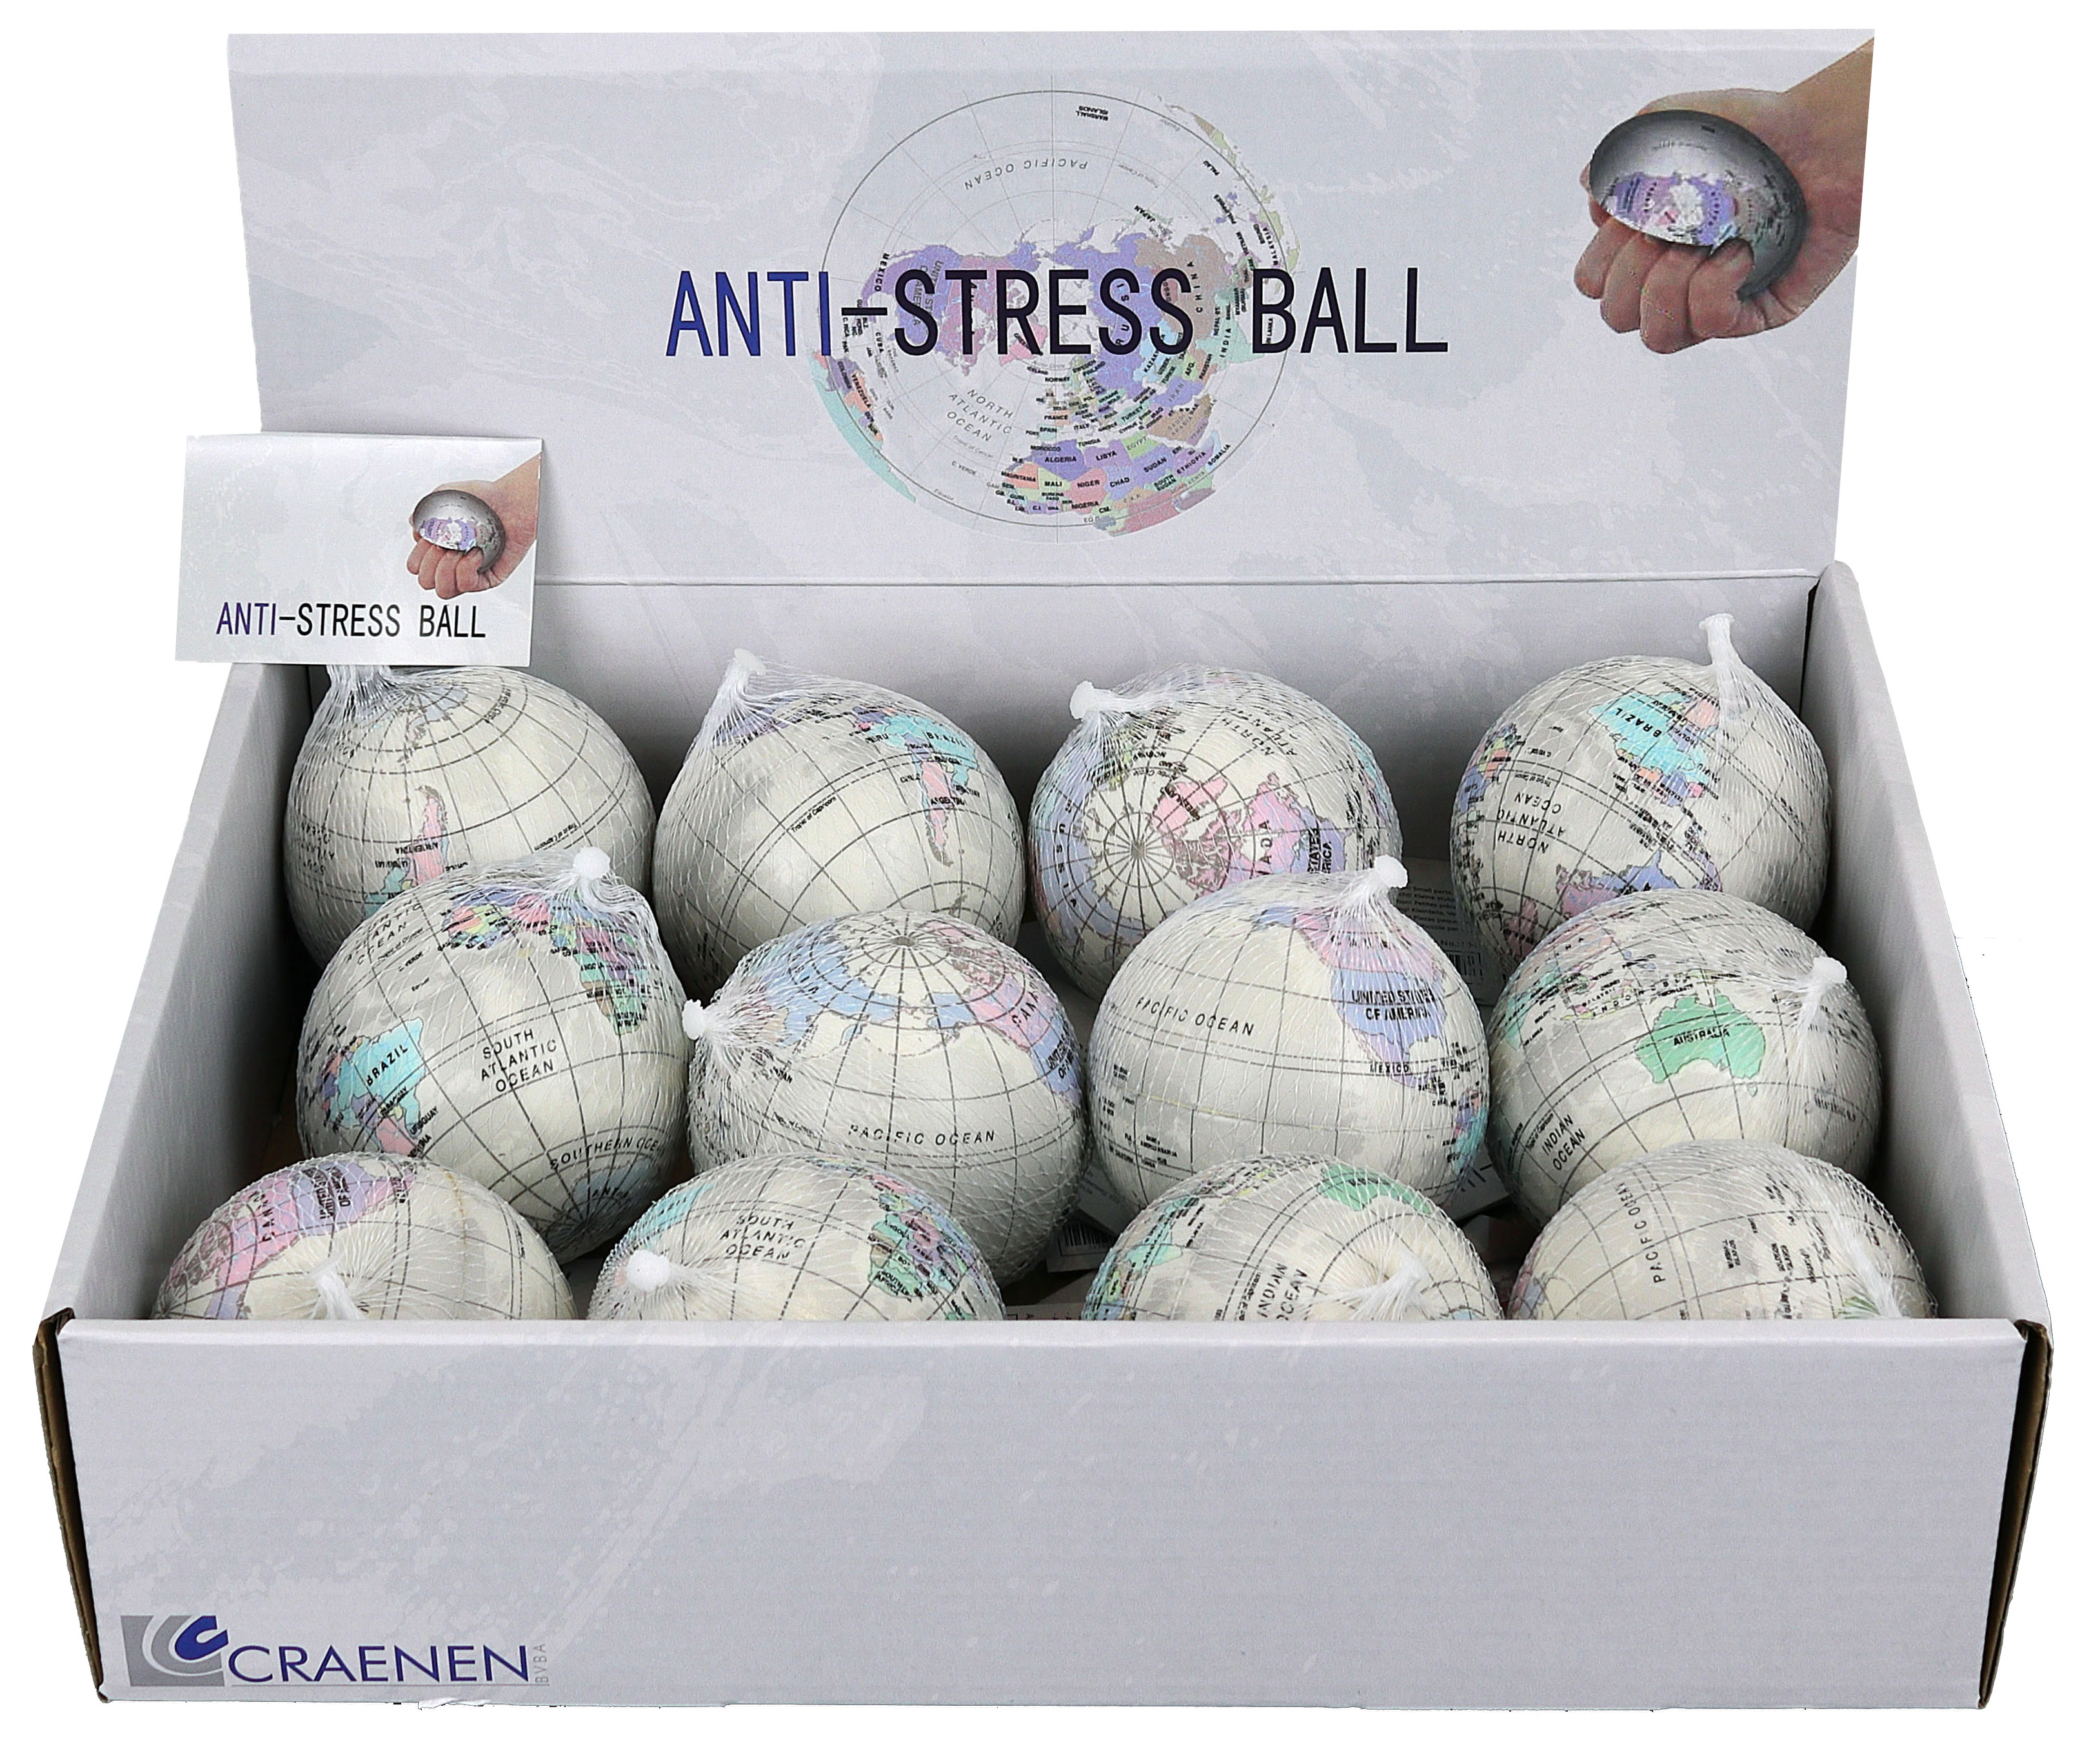 Craenen: Anti-stress ball